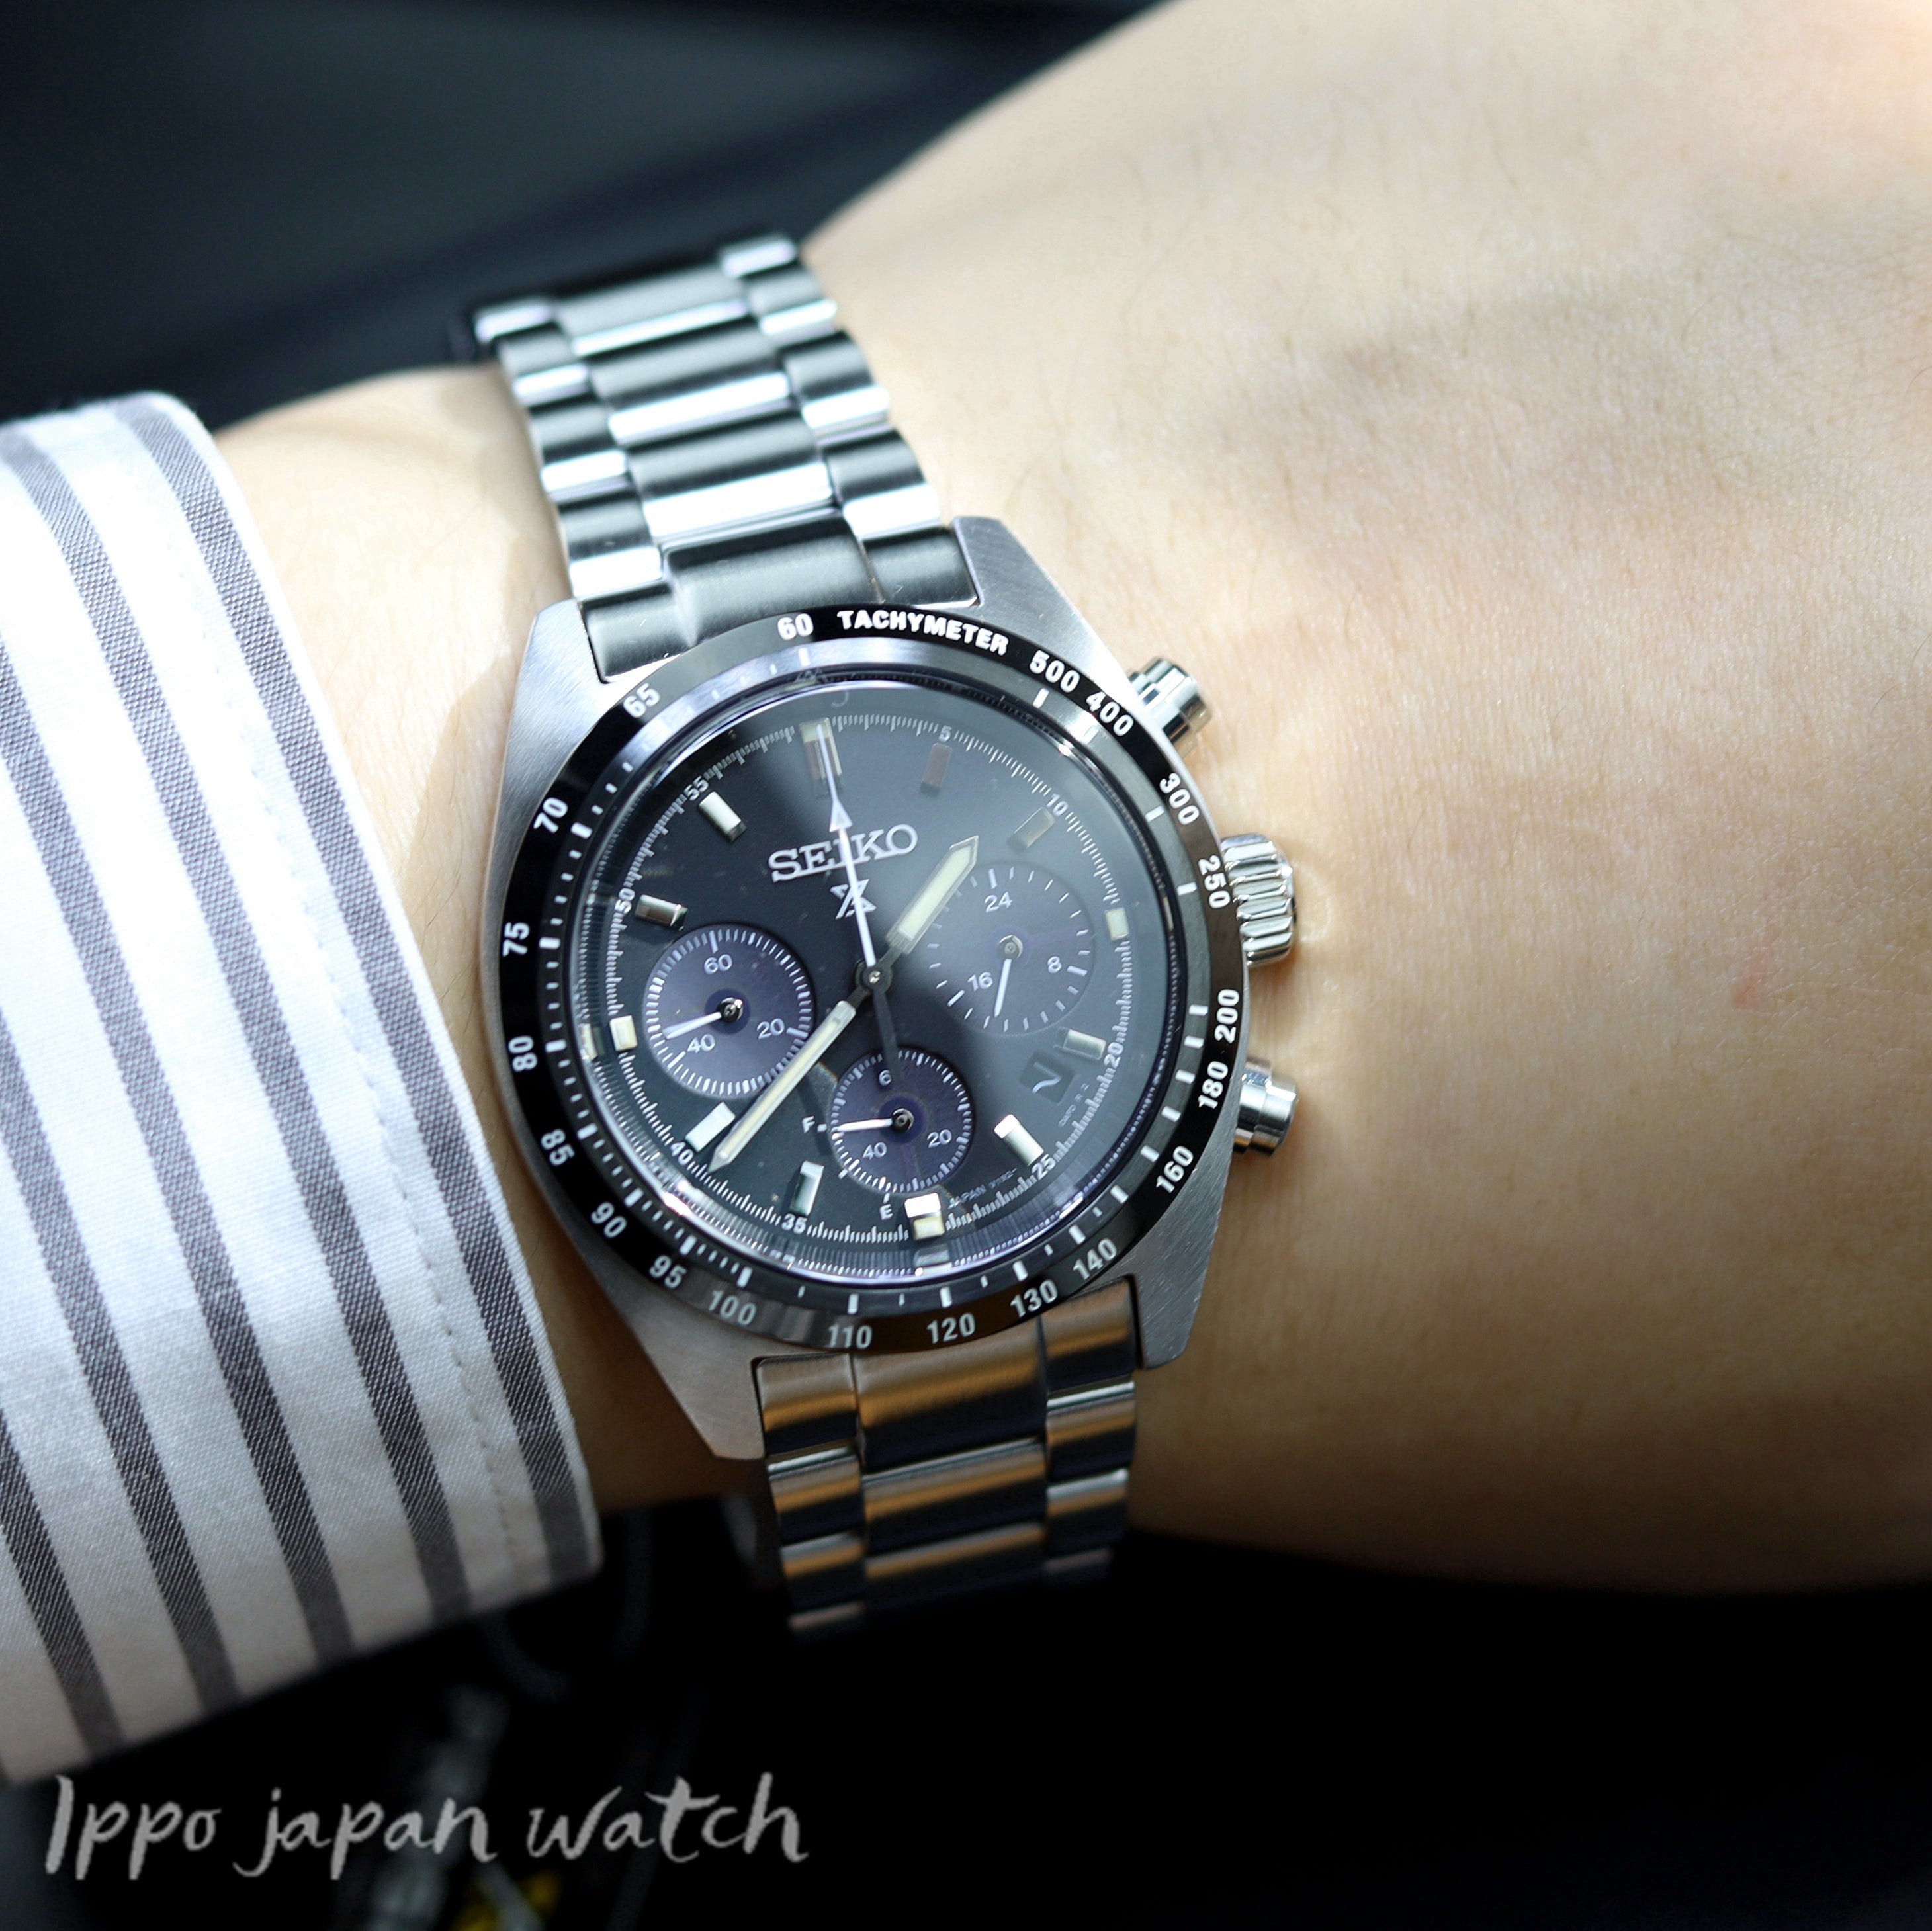 SEIKO Prospex SBDL091 SSC819P1 Solar drive V192 10 bar watch - IPPO JAPAN WATCH 